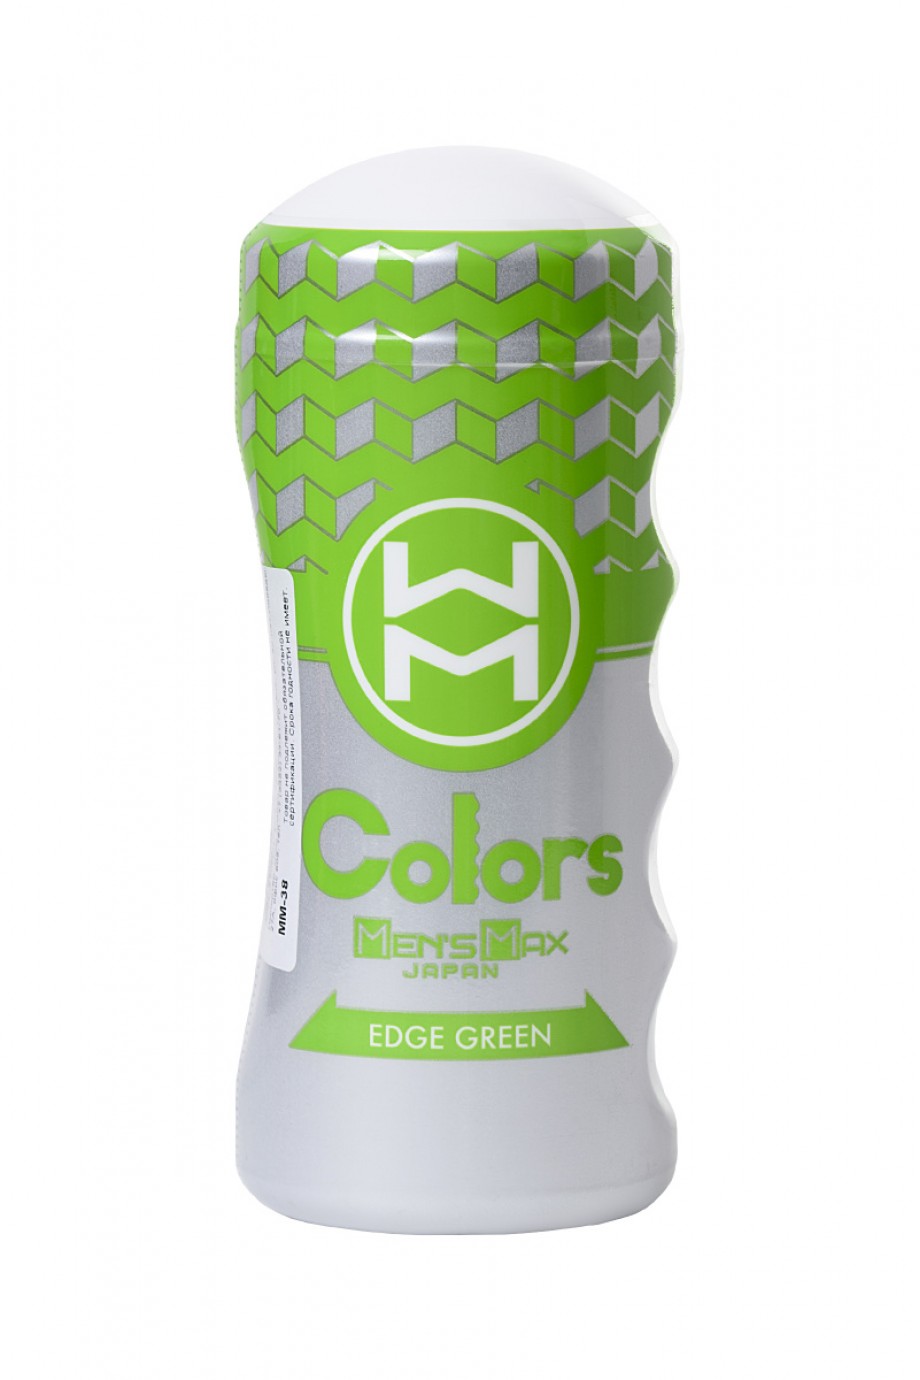 MensMax Colors Edge Green